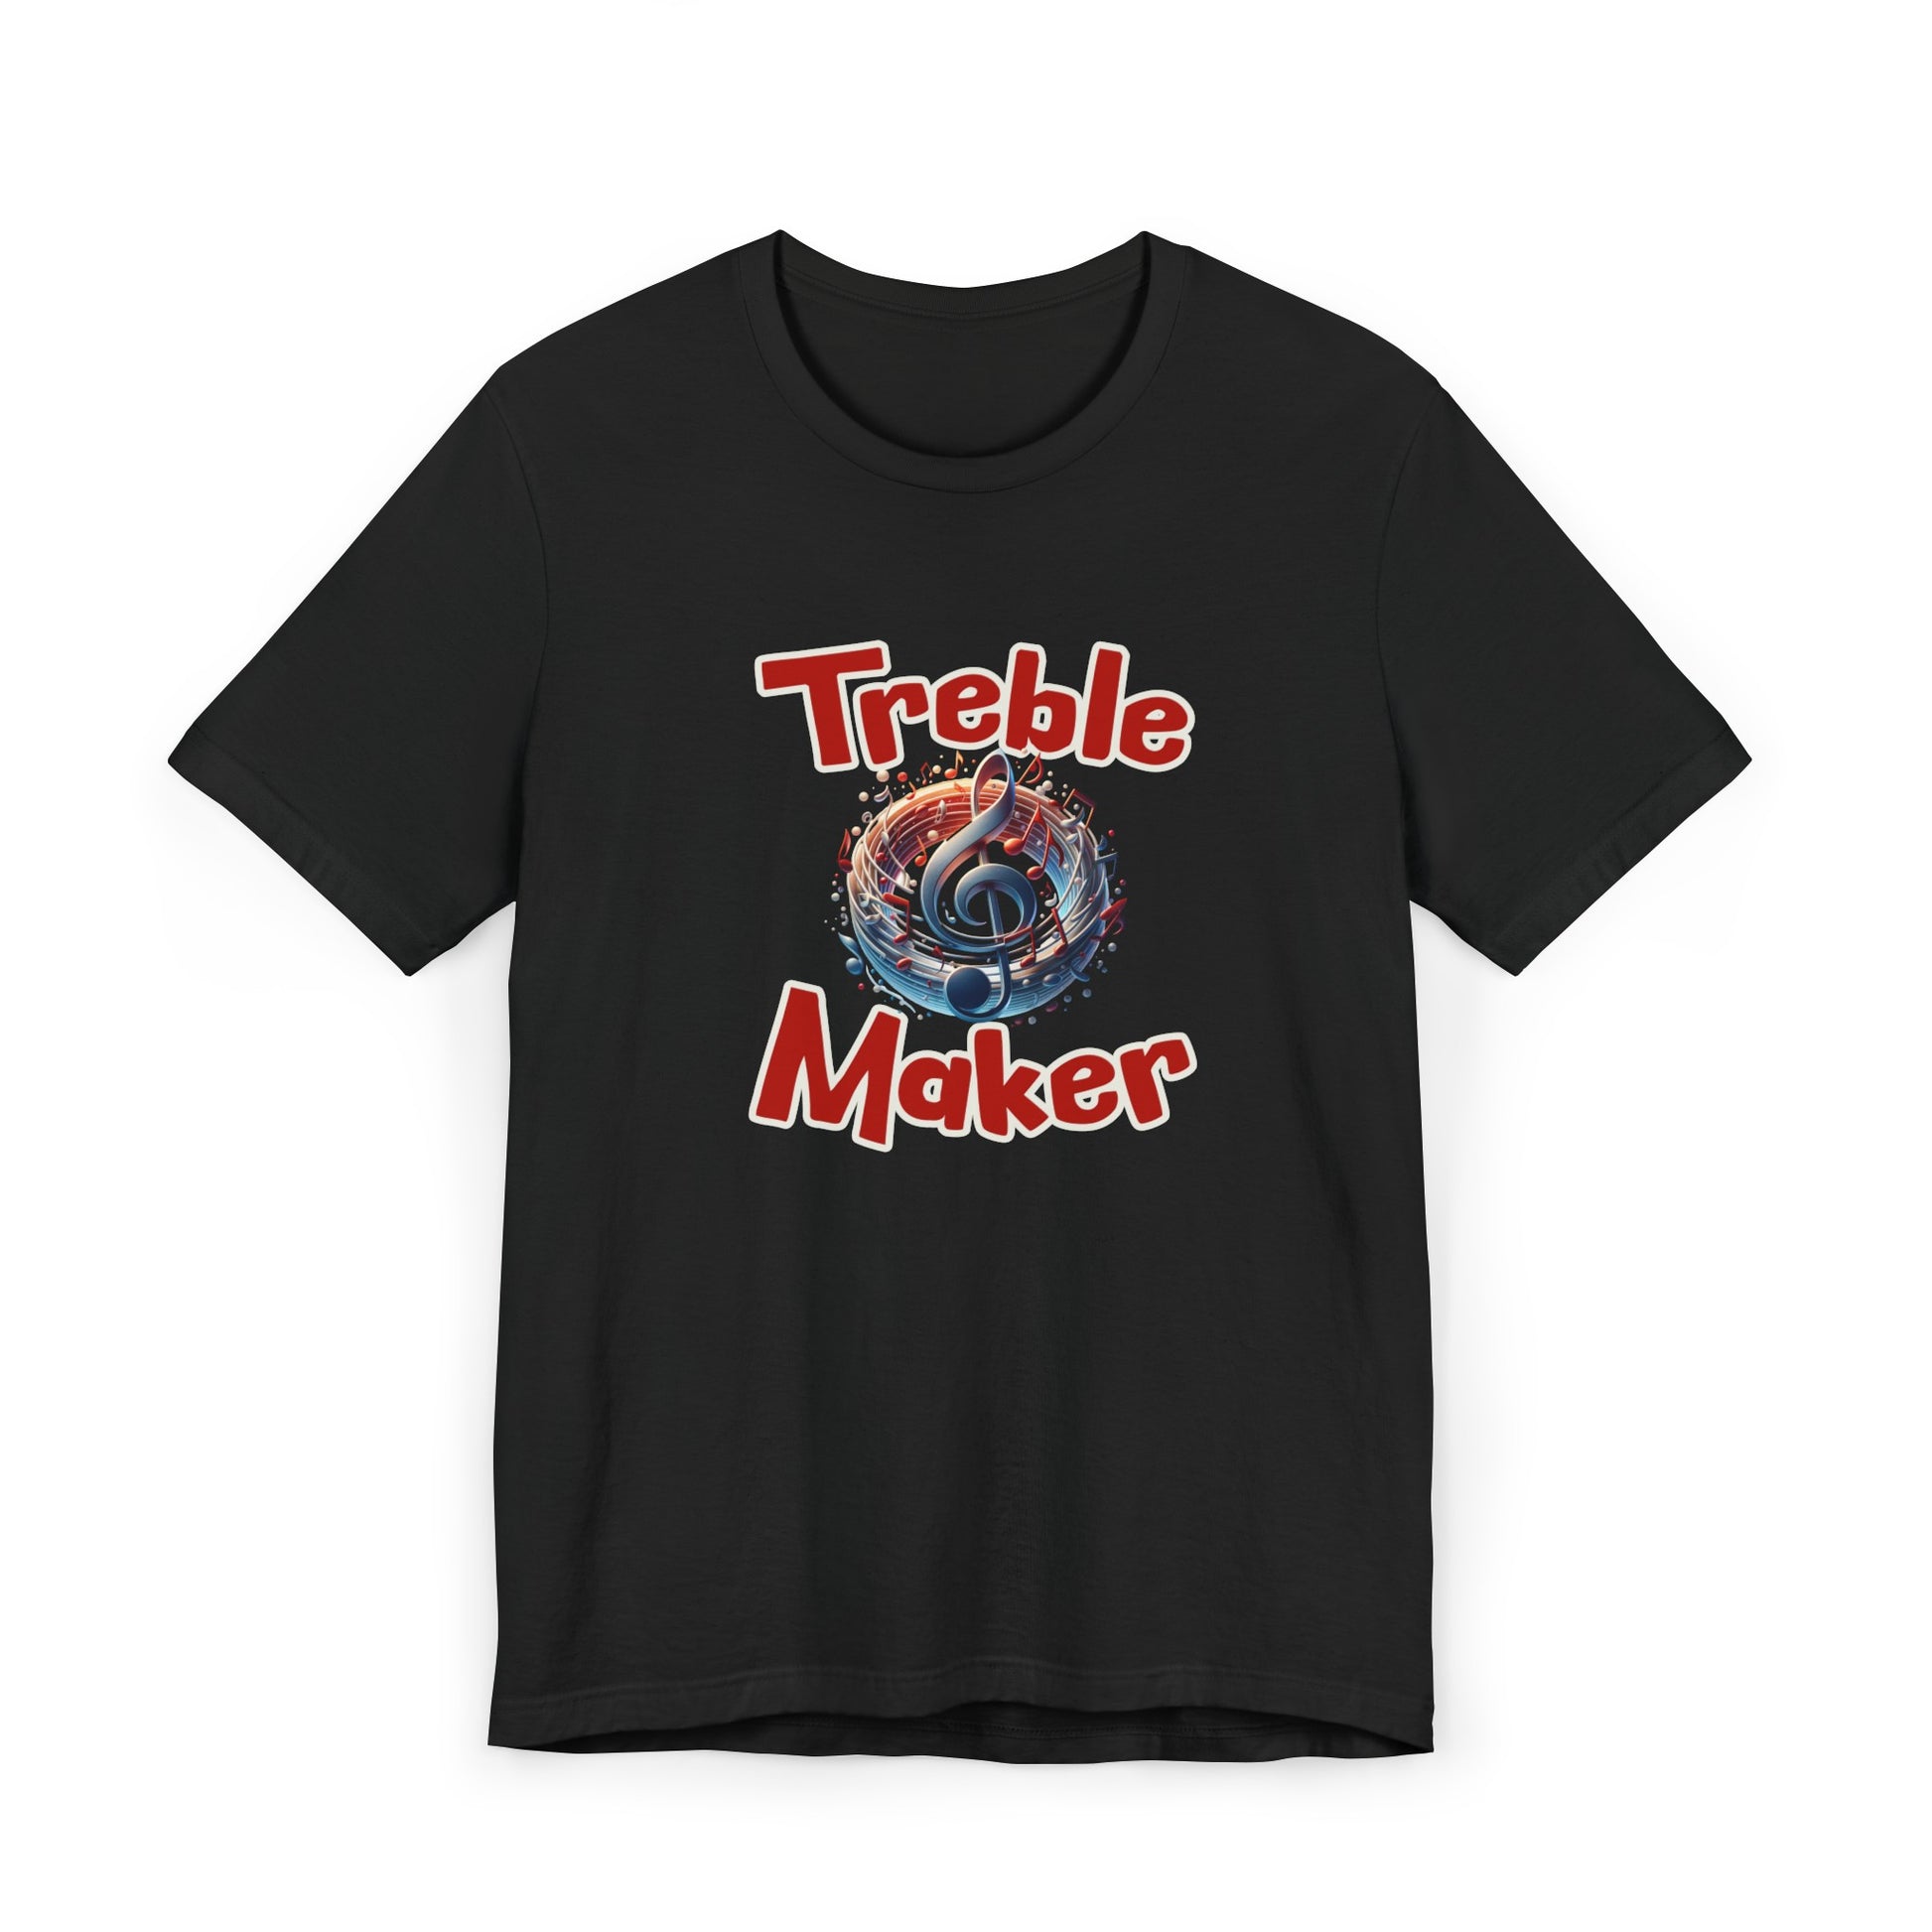 Treble Maker T-shirt black color 